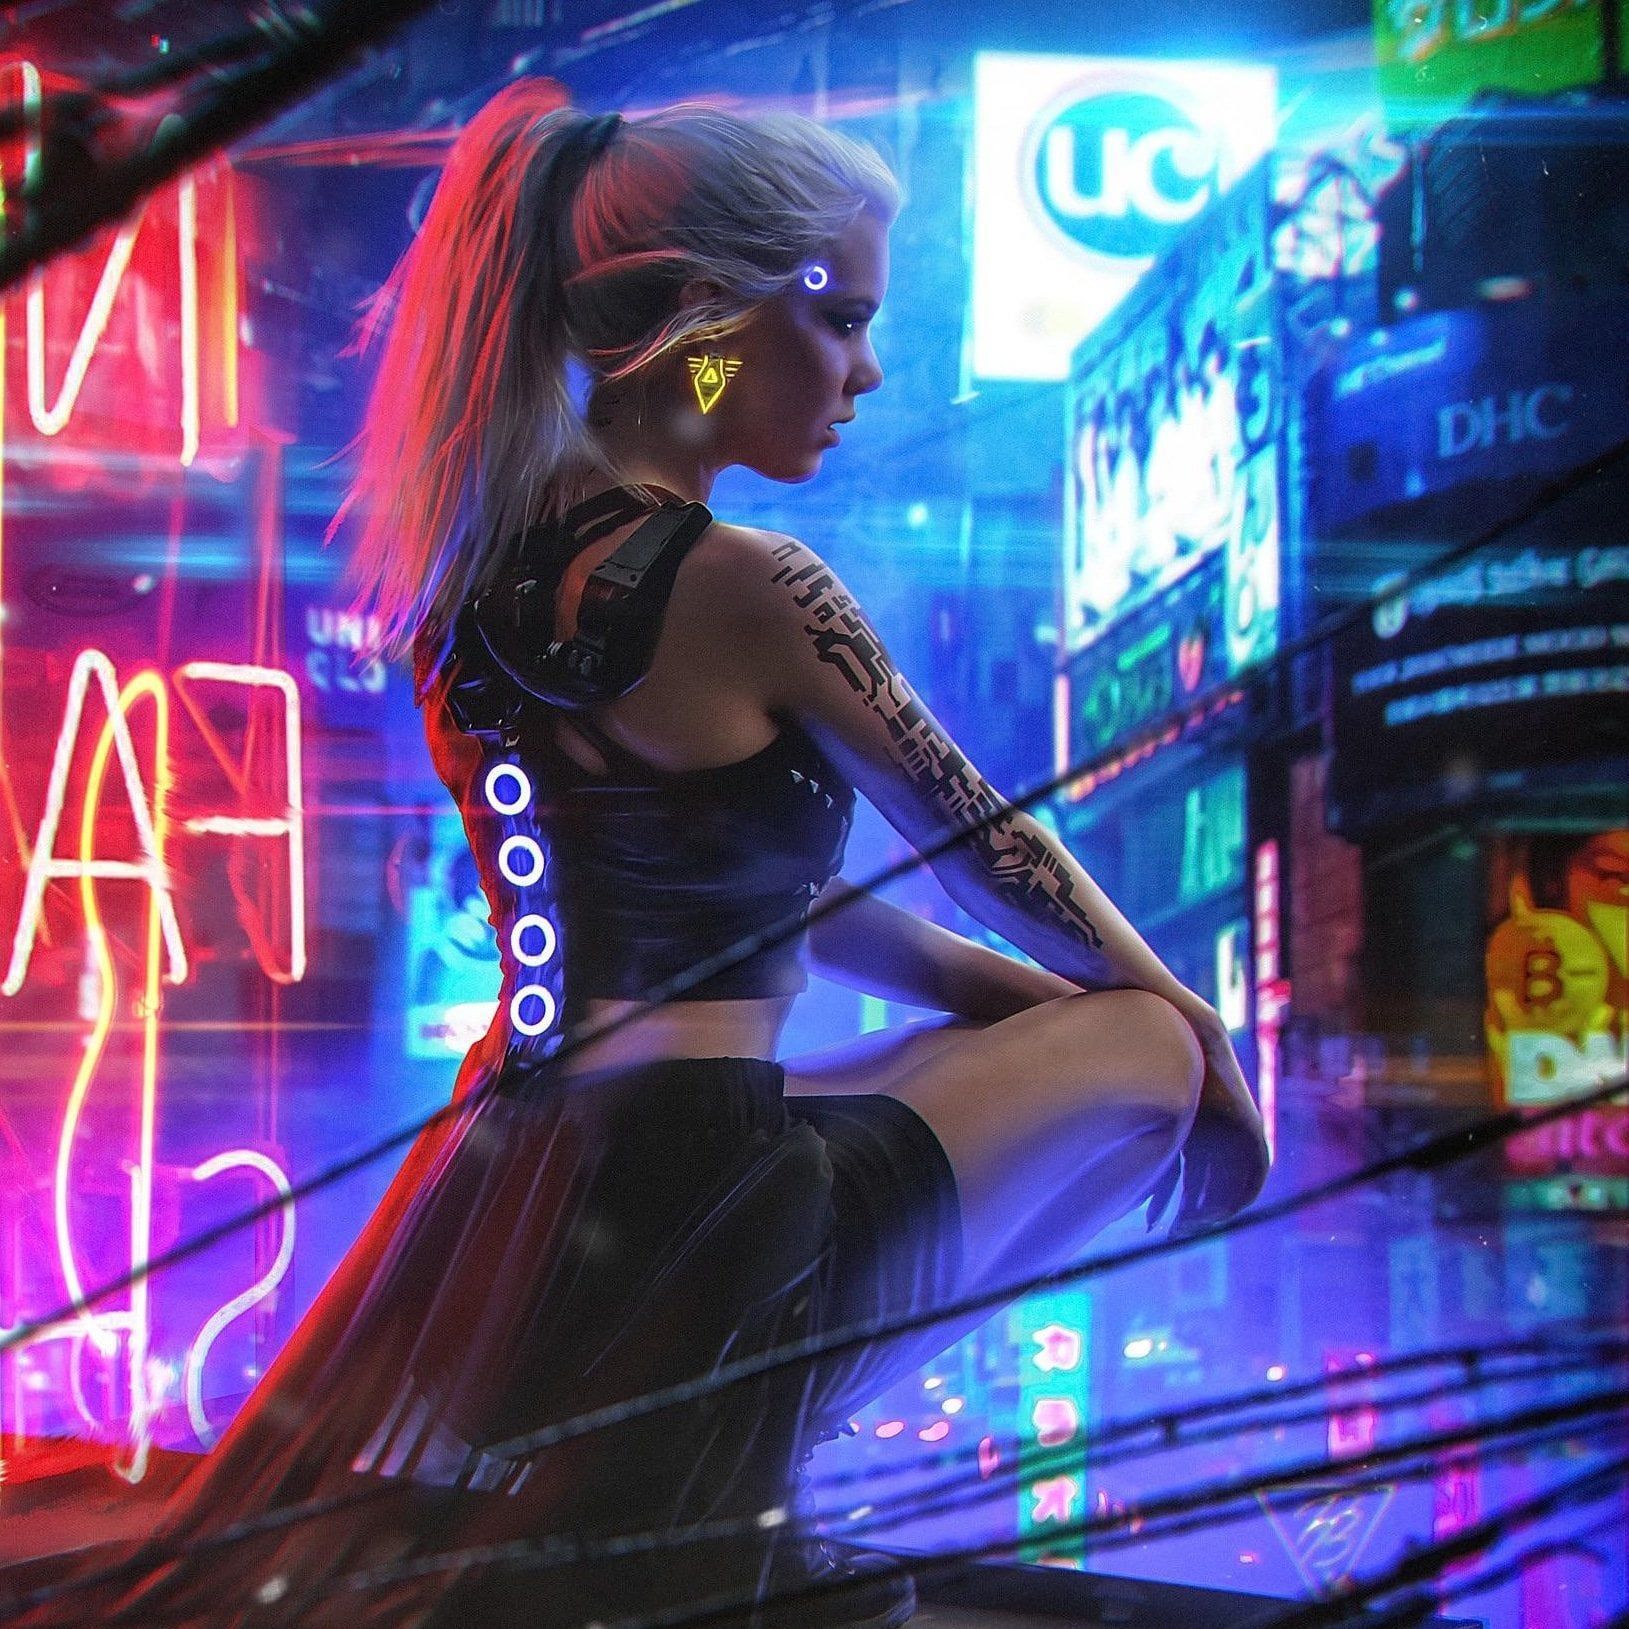 Cyberpunk girl in the neon city. - Cyberpunk 2077